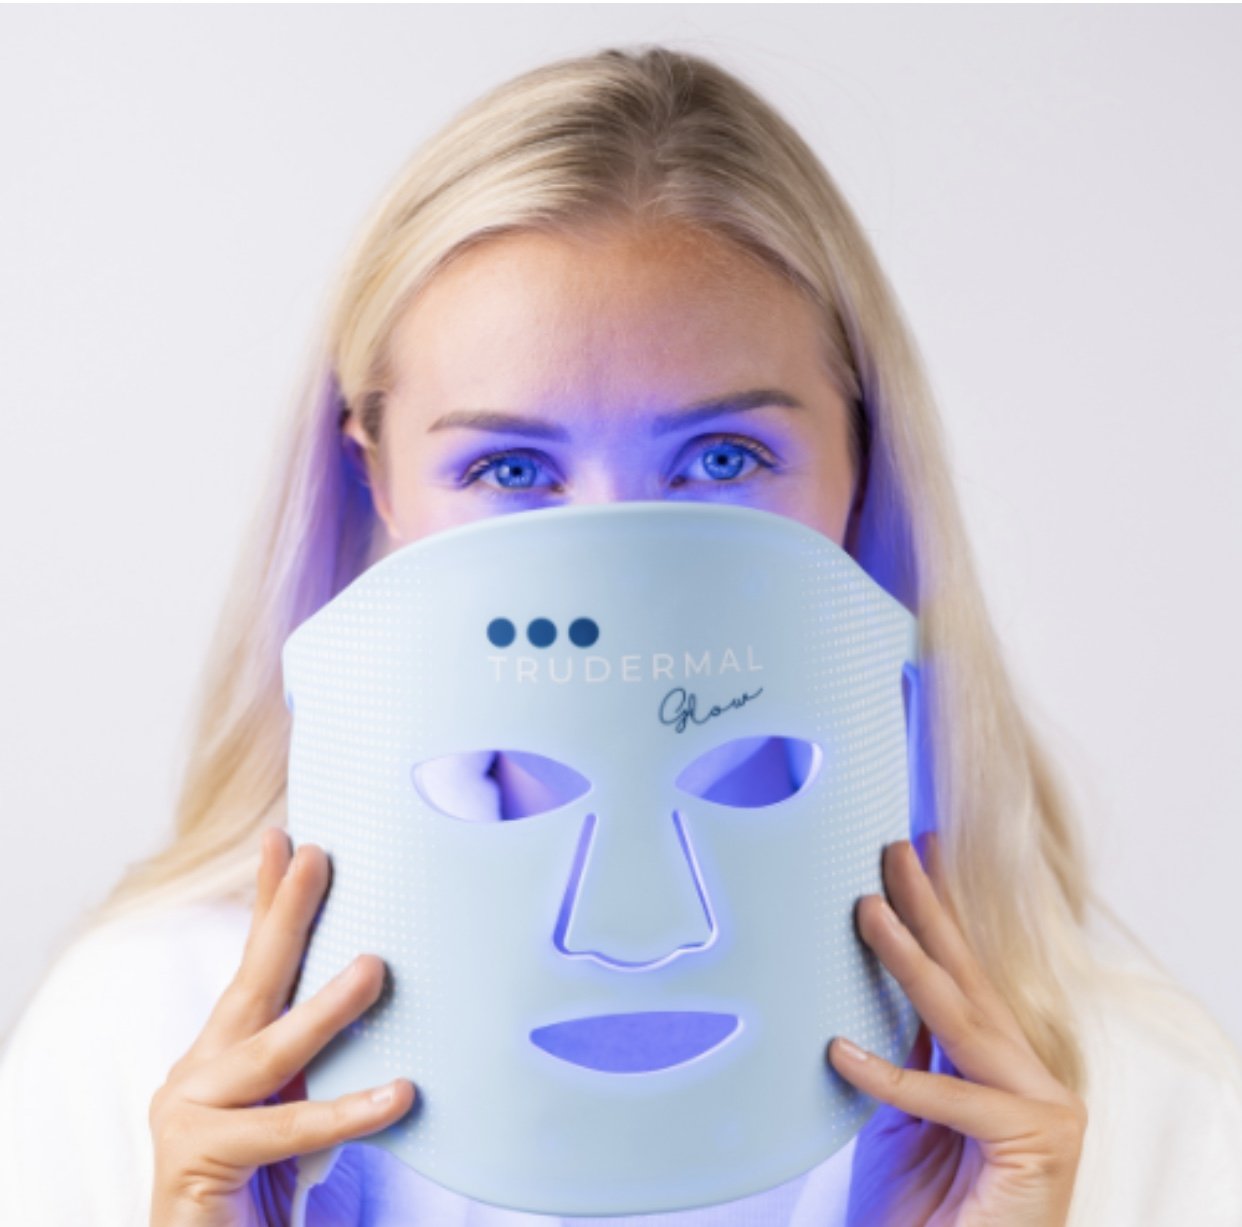 TruDermal Glow LED Mask